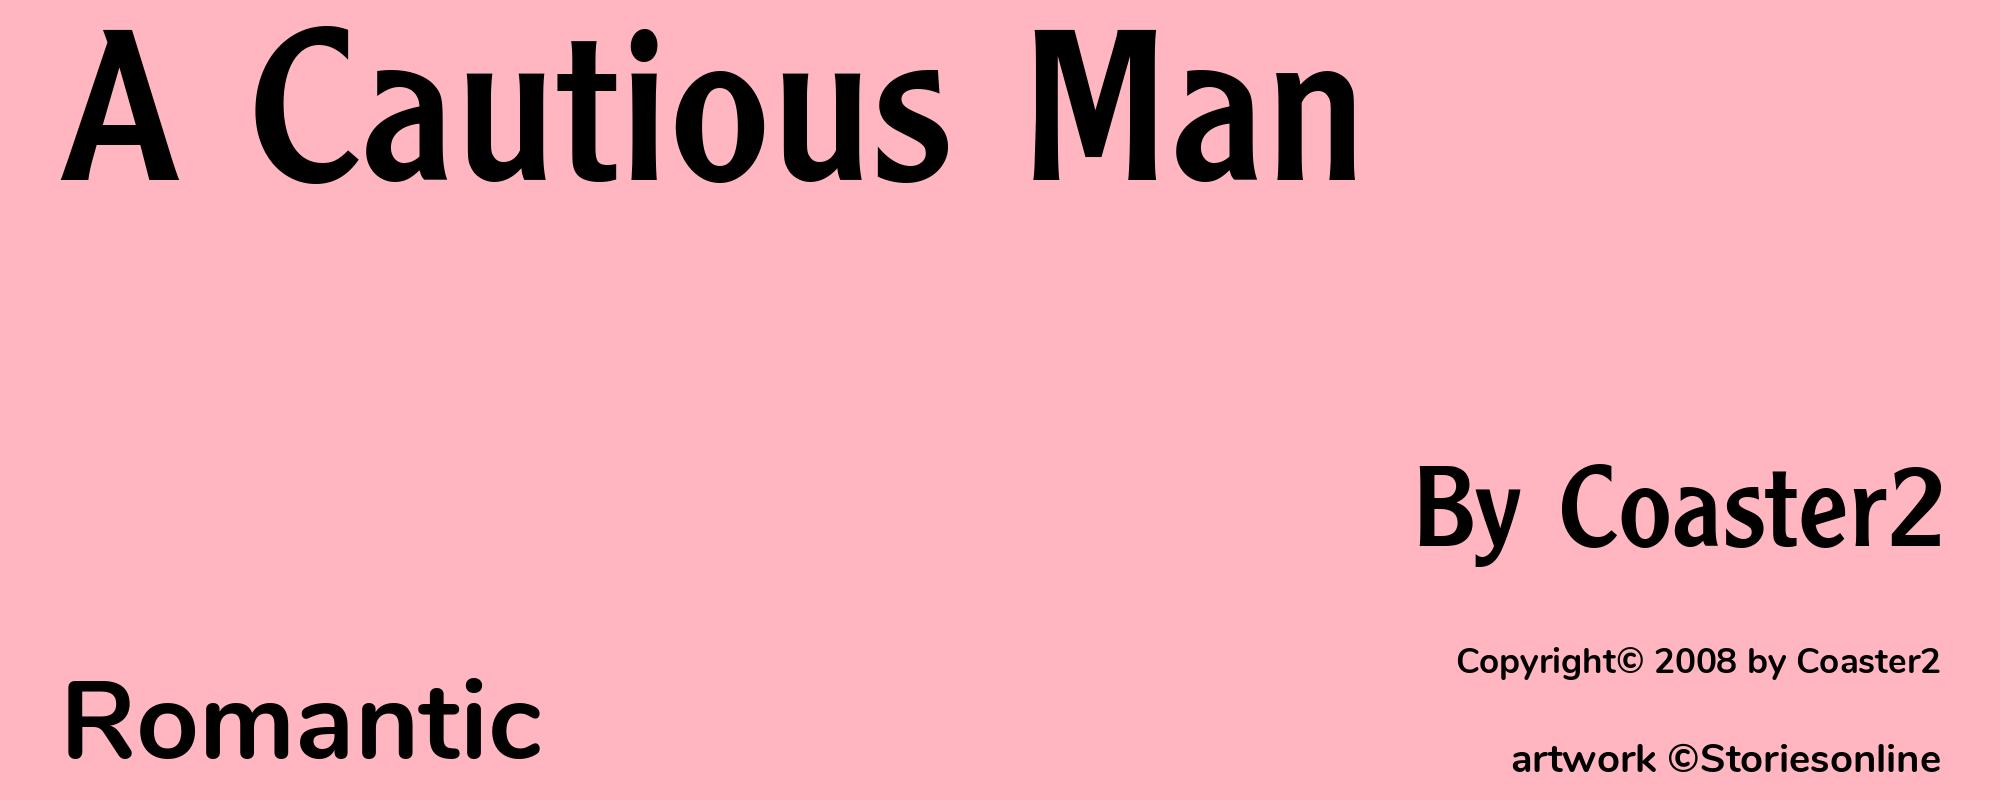 A Cautious Man - Cover